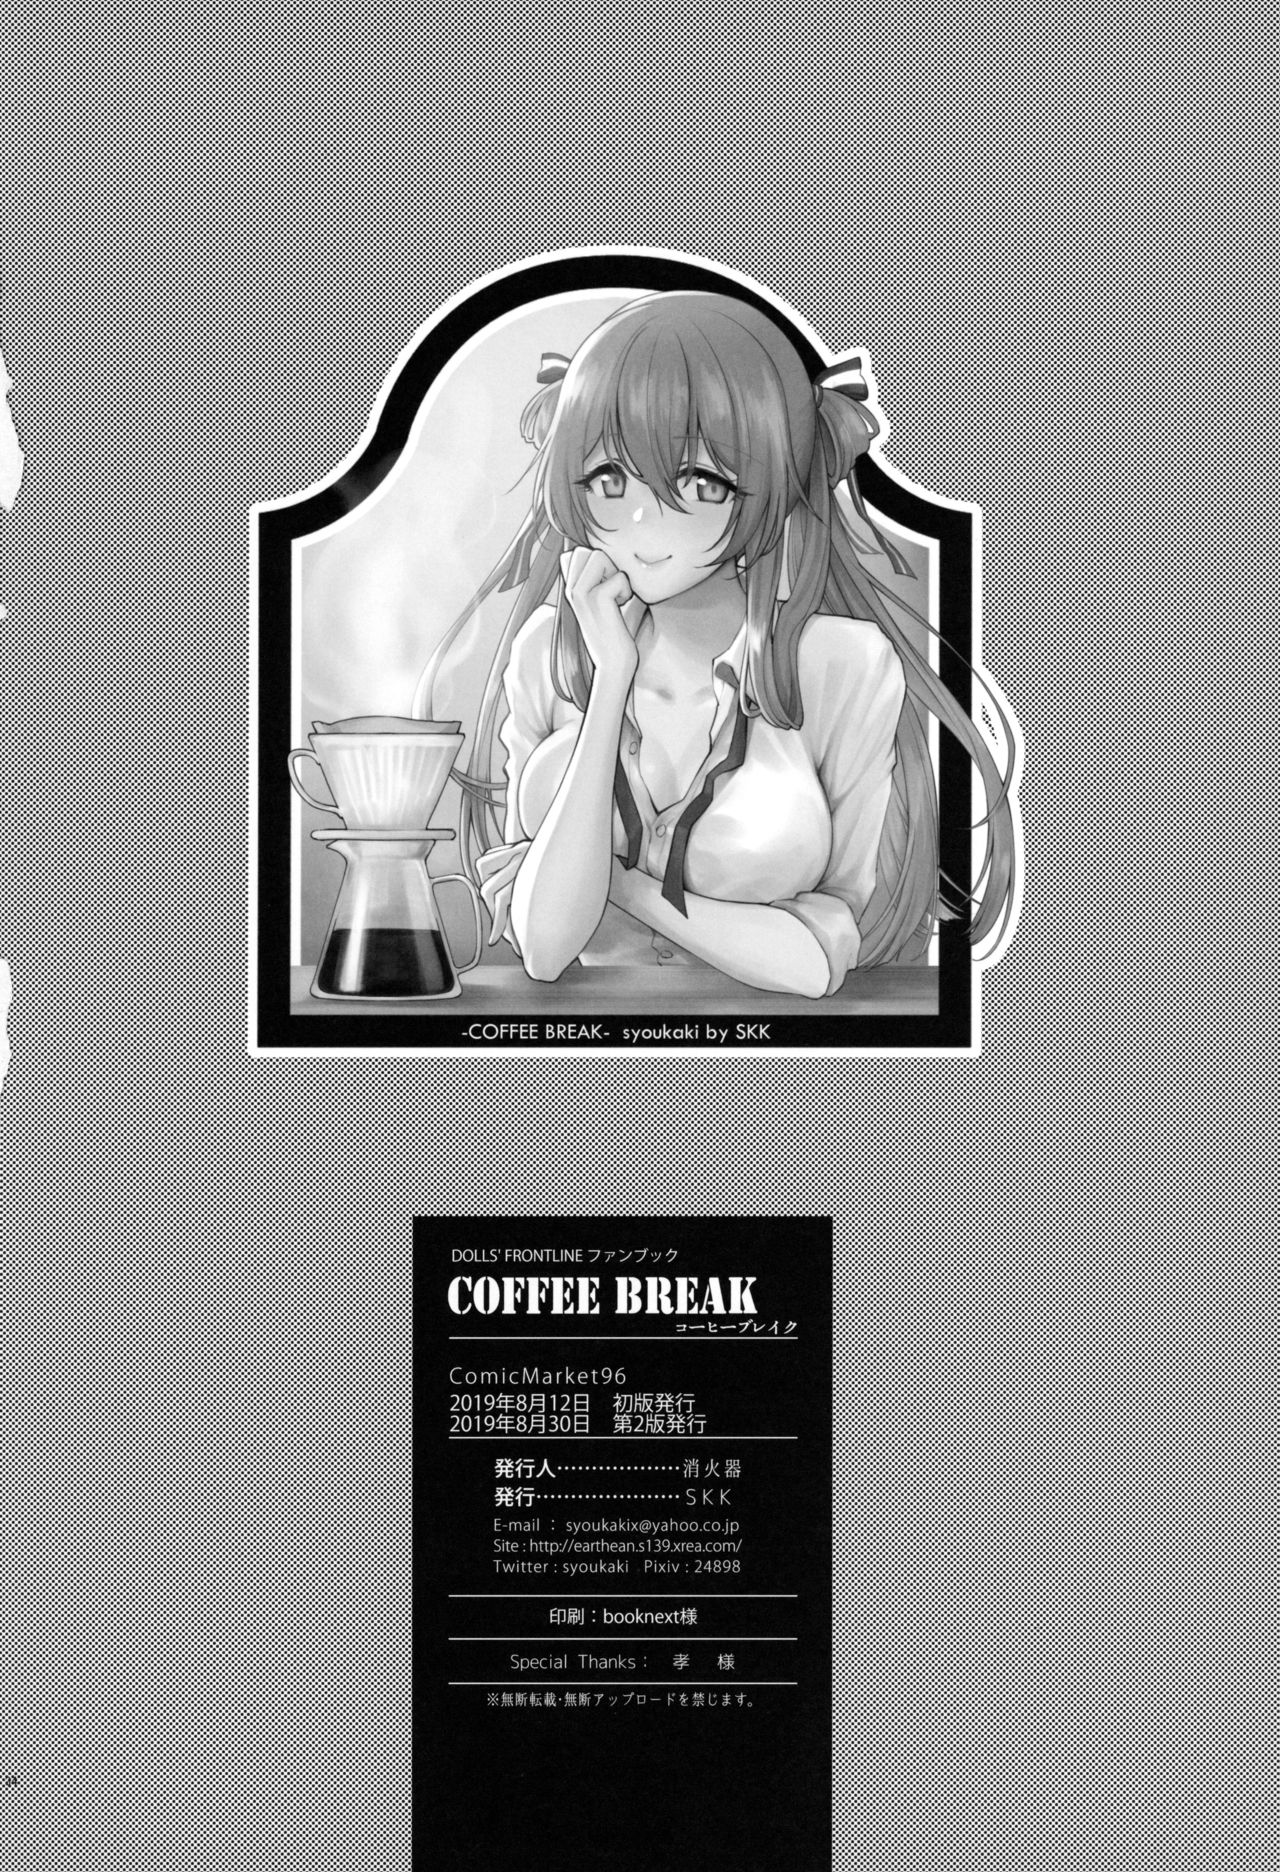 [SKK (消火器)] COFFEE BREAK (少女前線) [2019年8月30日]